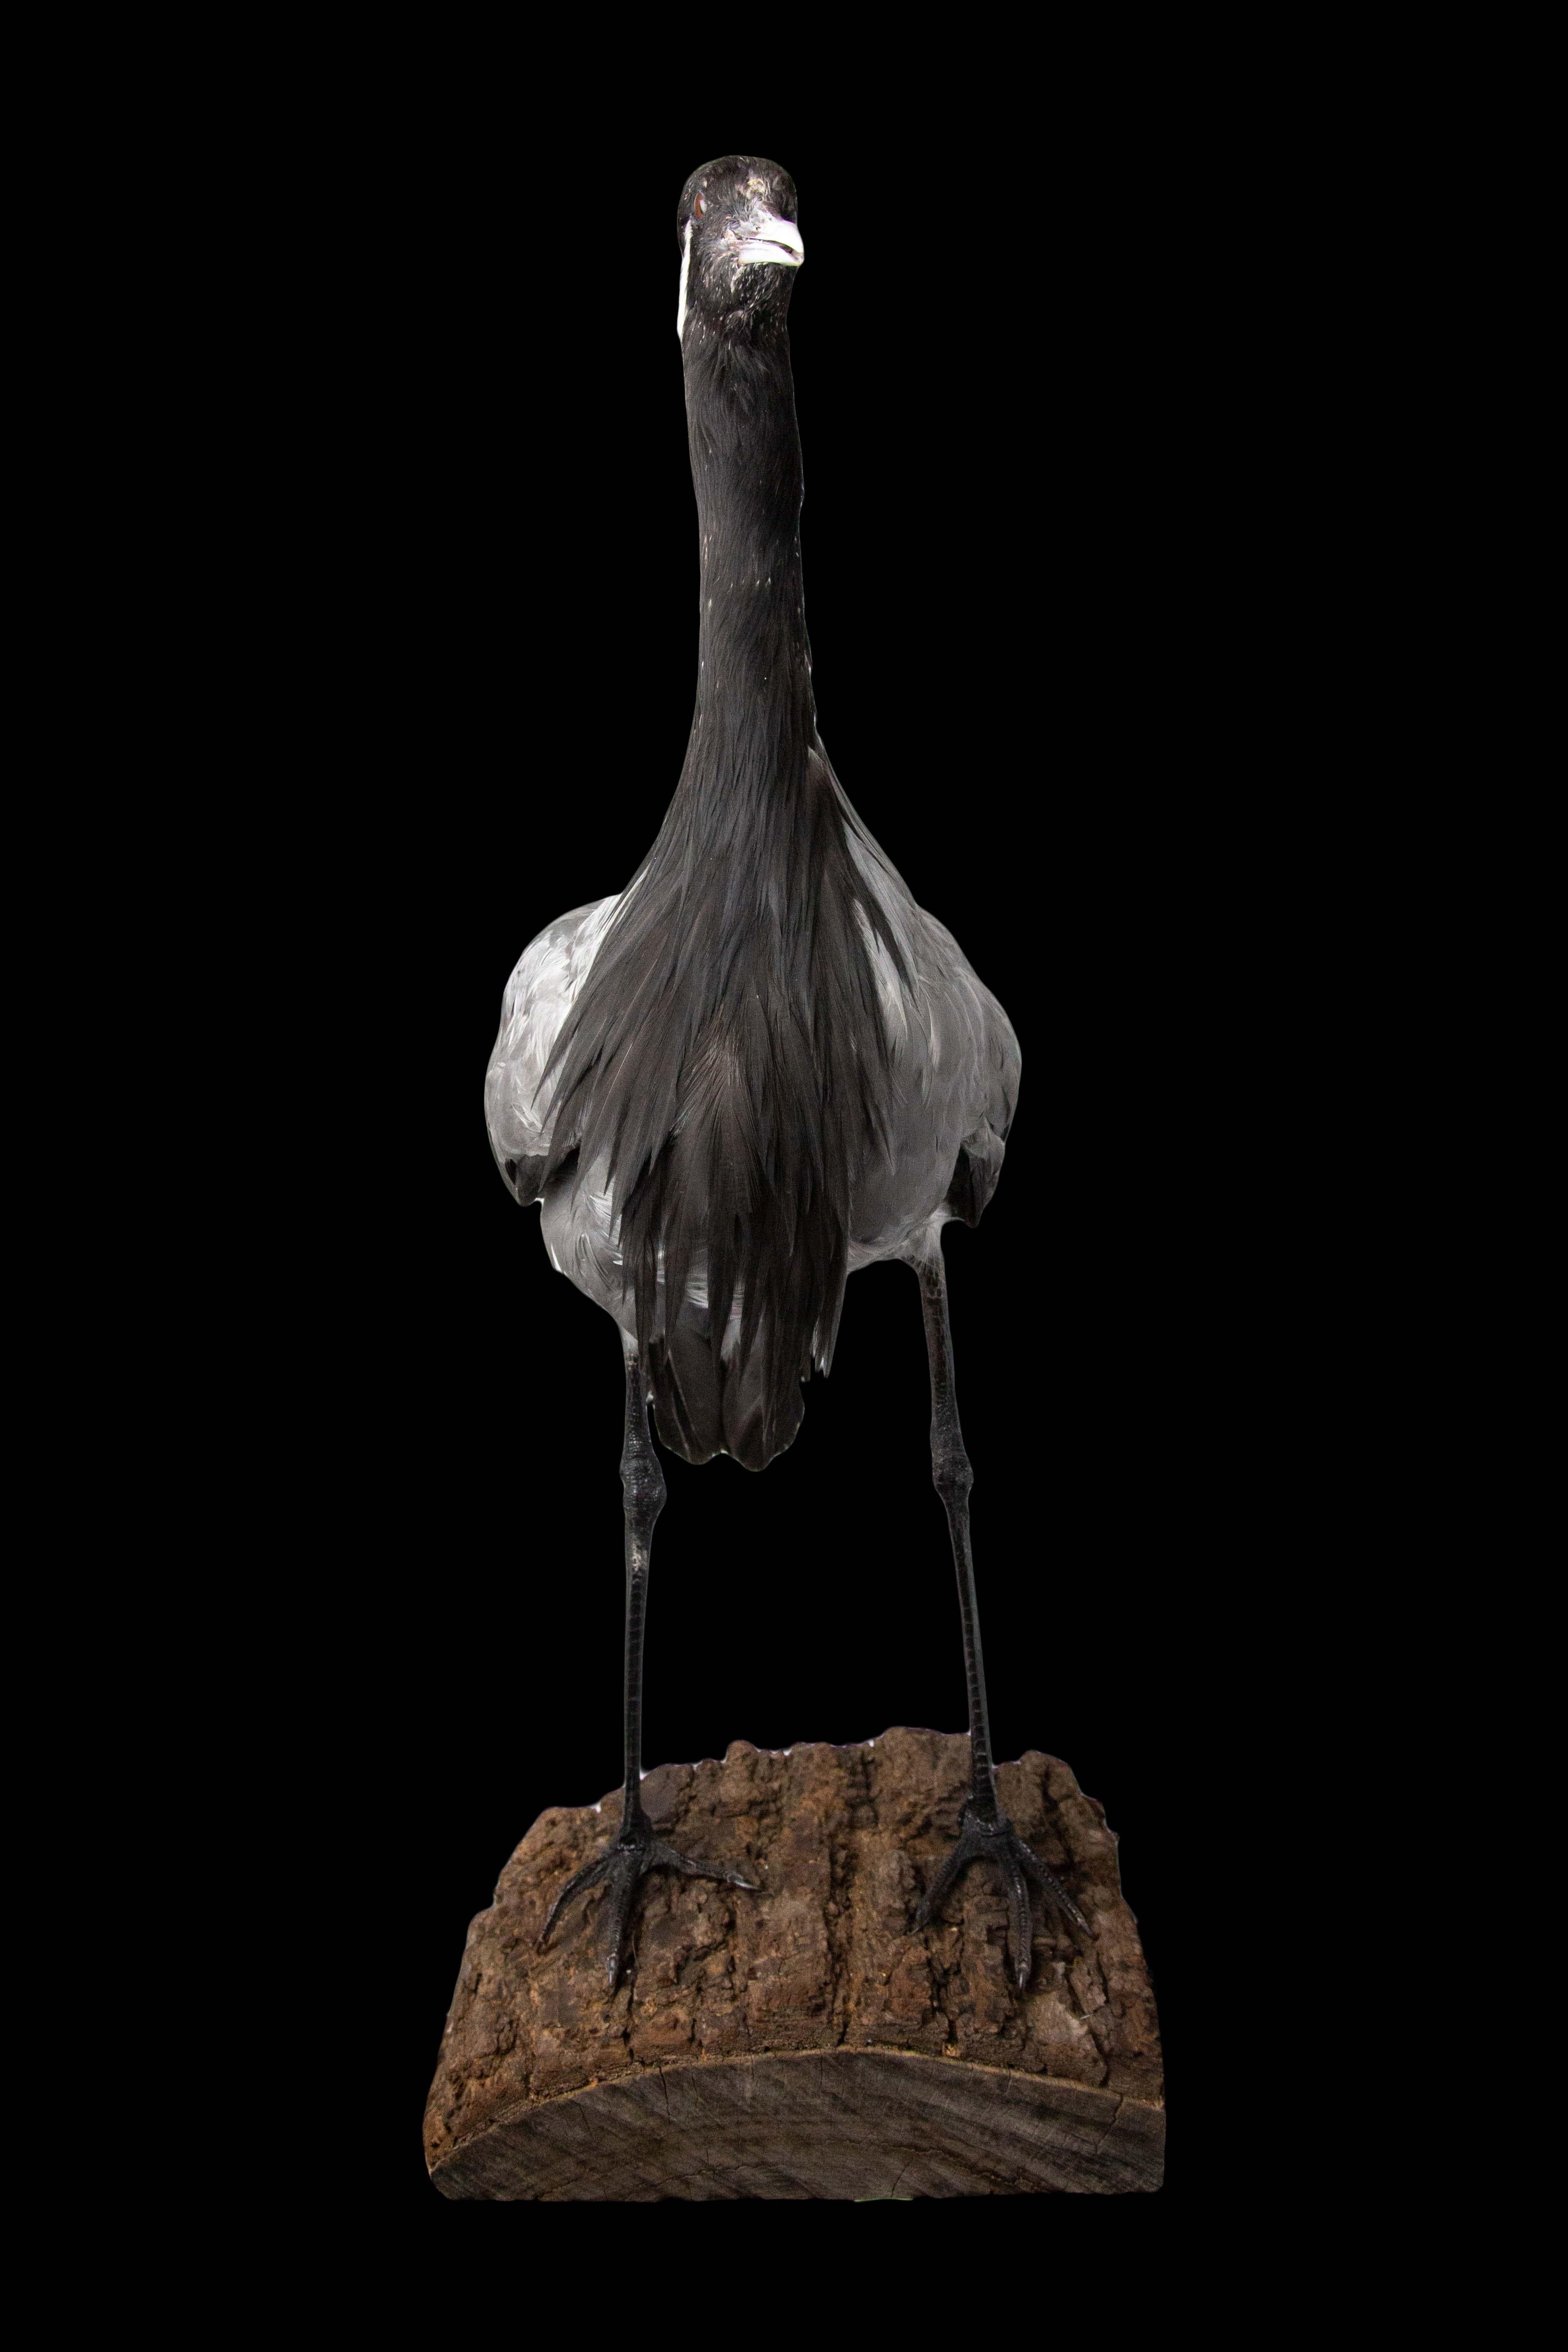 demoiselle crane for sale